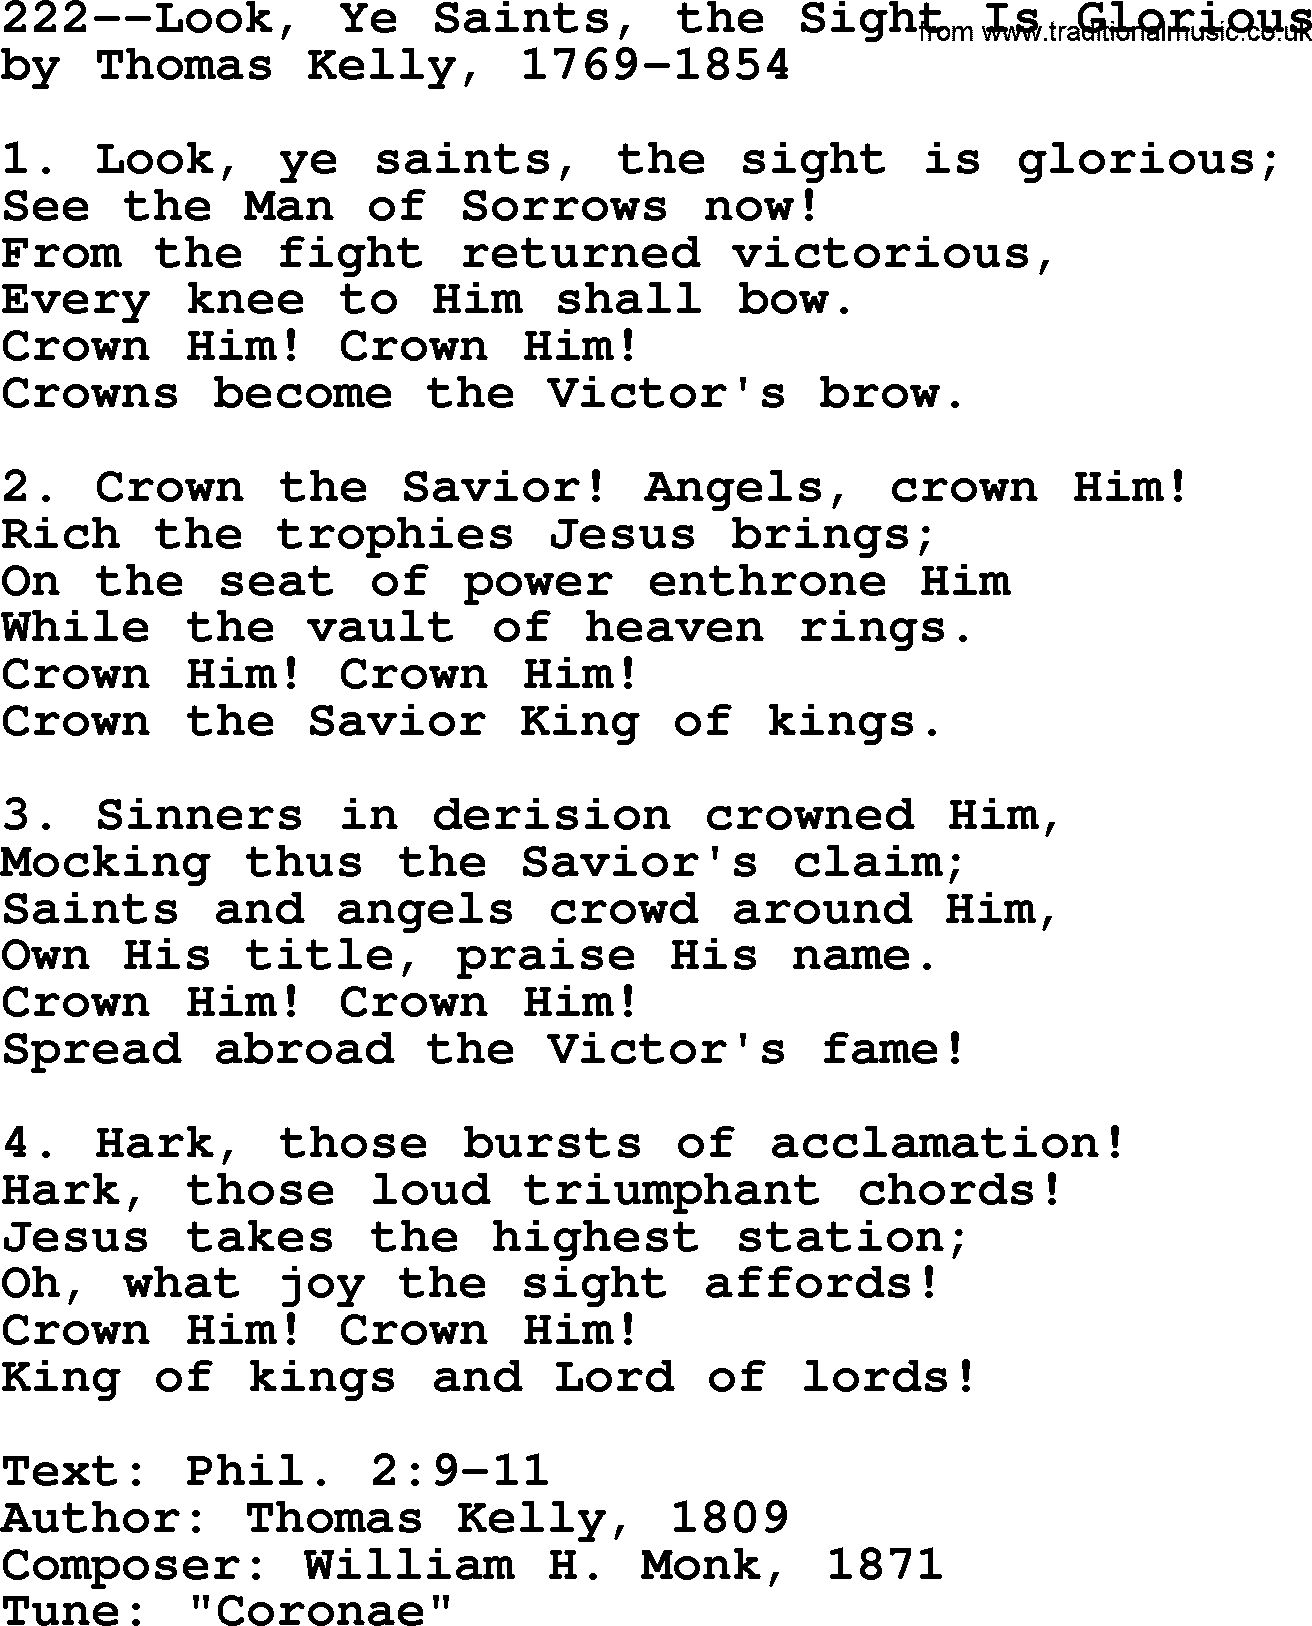 Lutheran Hymn: 222--Look, Ye Saints, the Sight Is Glorious.txt lyrics with PDF